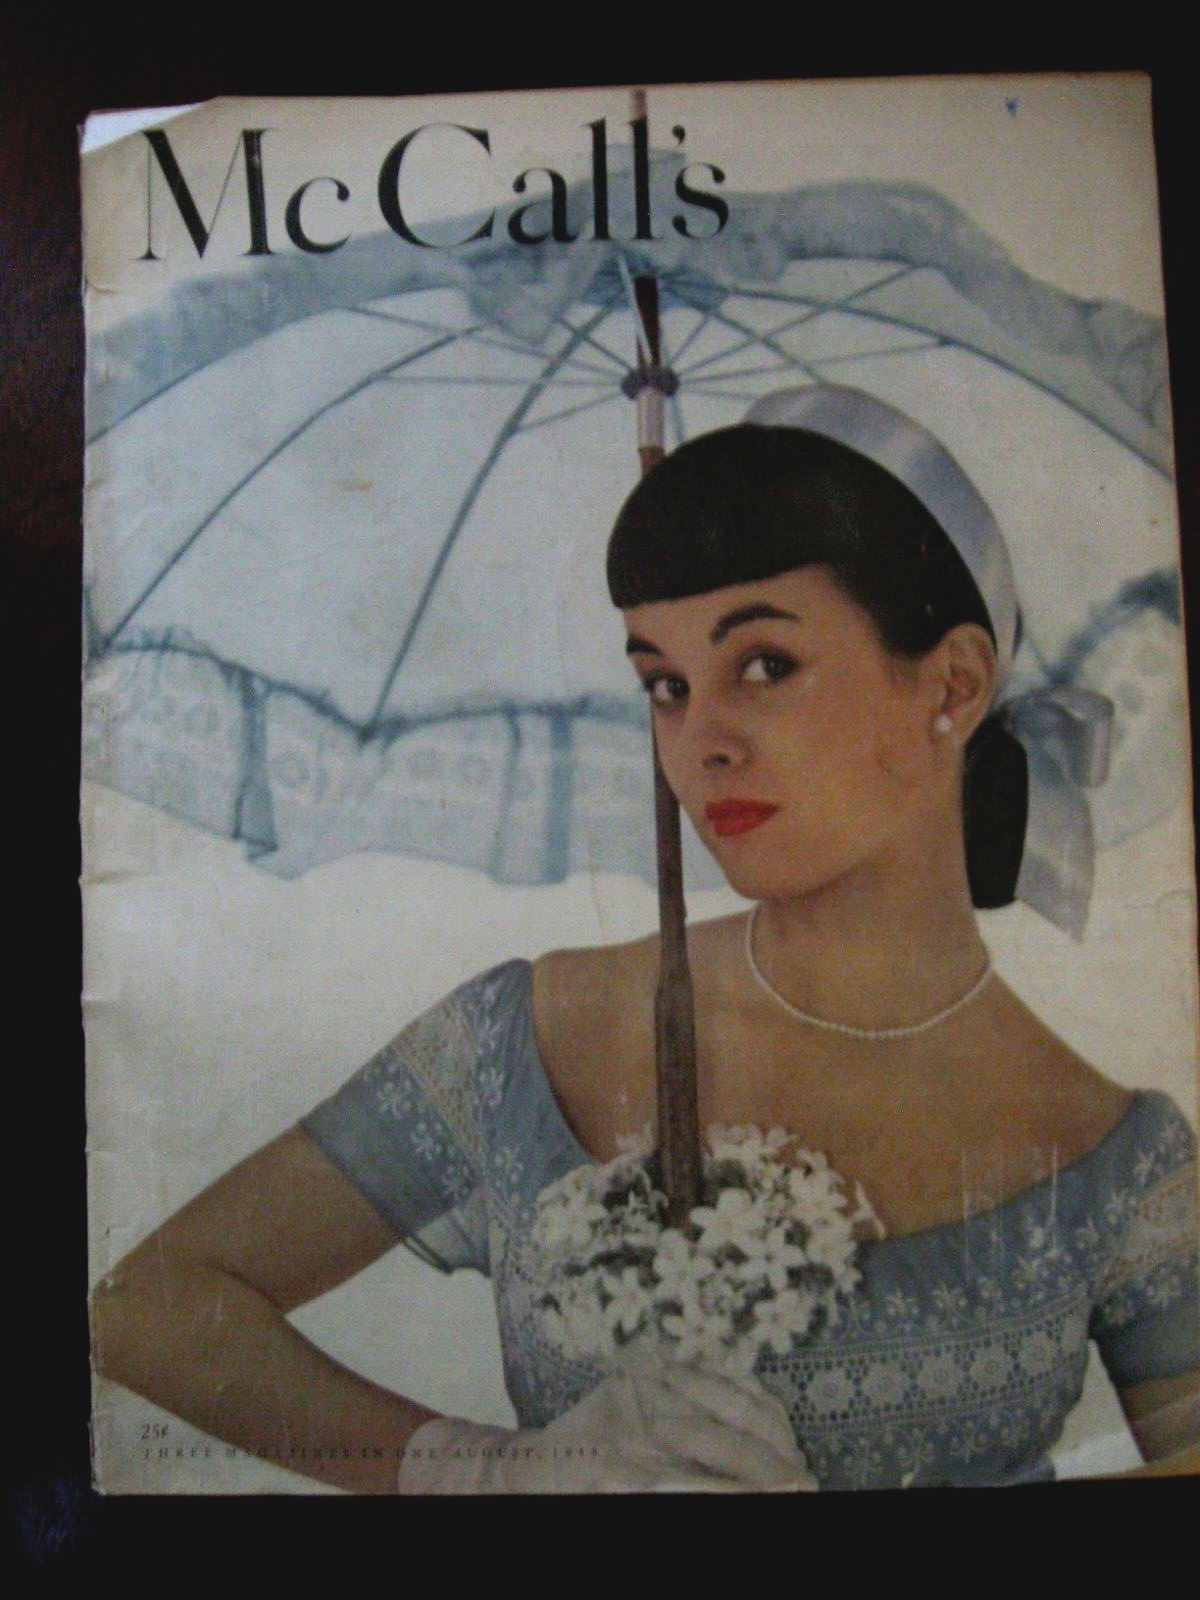 McCall's 1948 August Magazine Vintage Fashion Advertising Vivid Graphics & Art